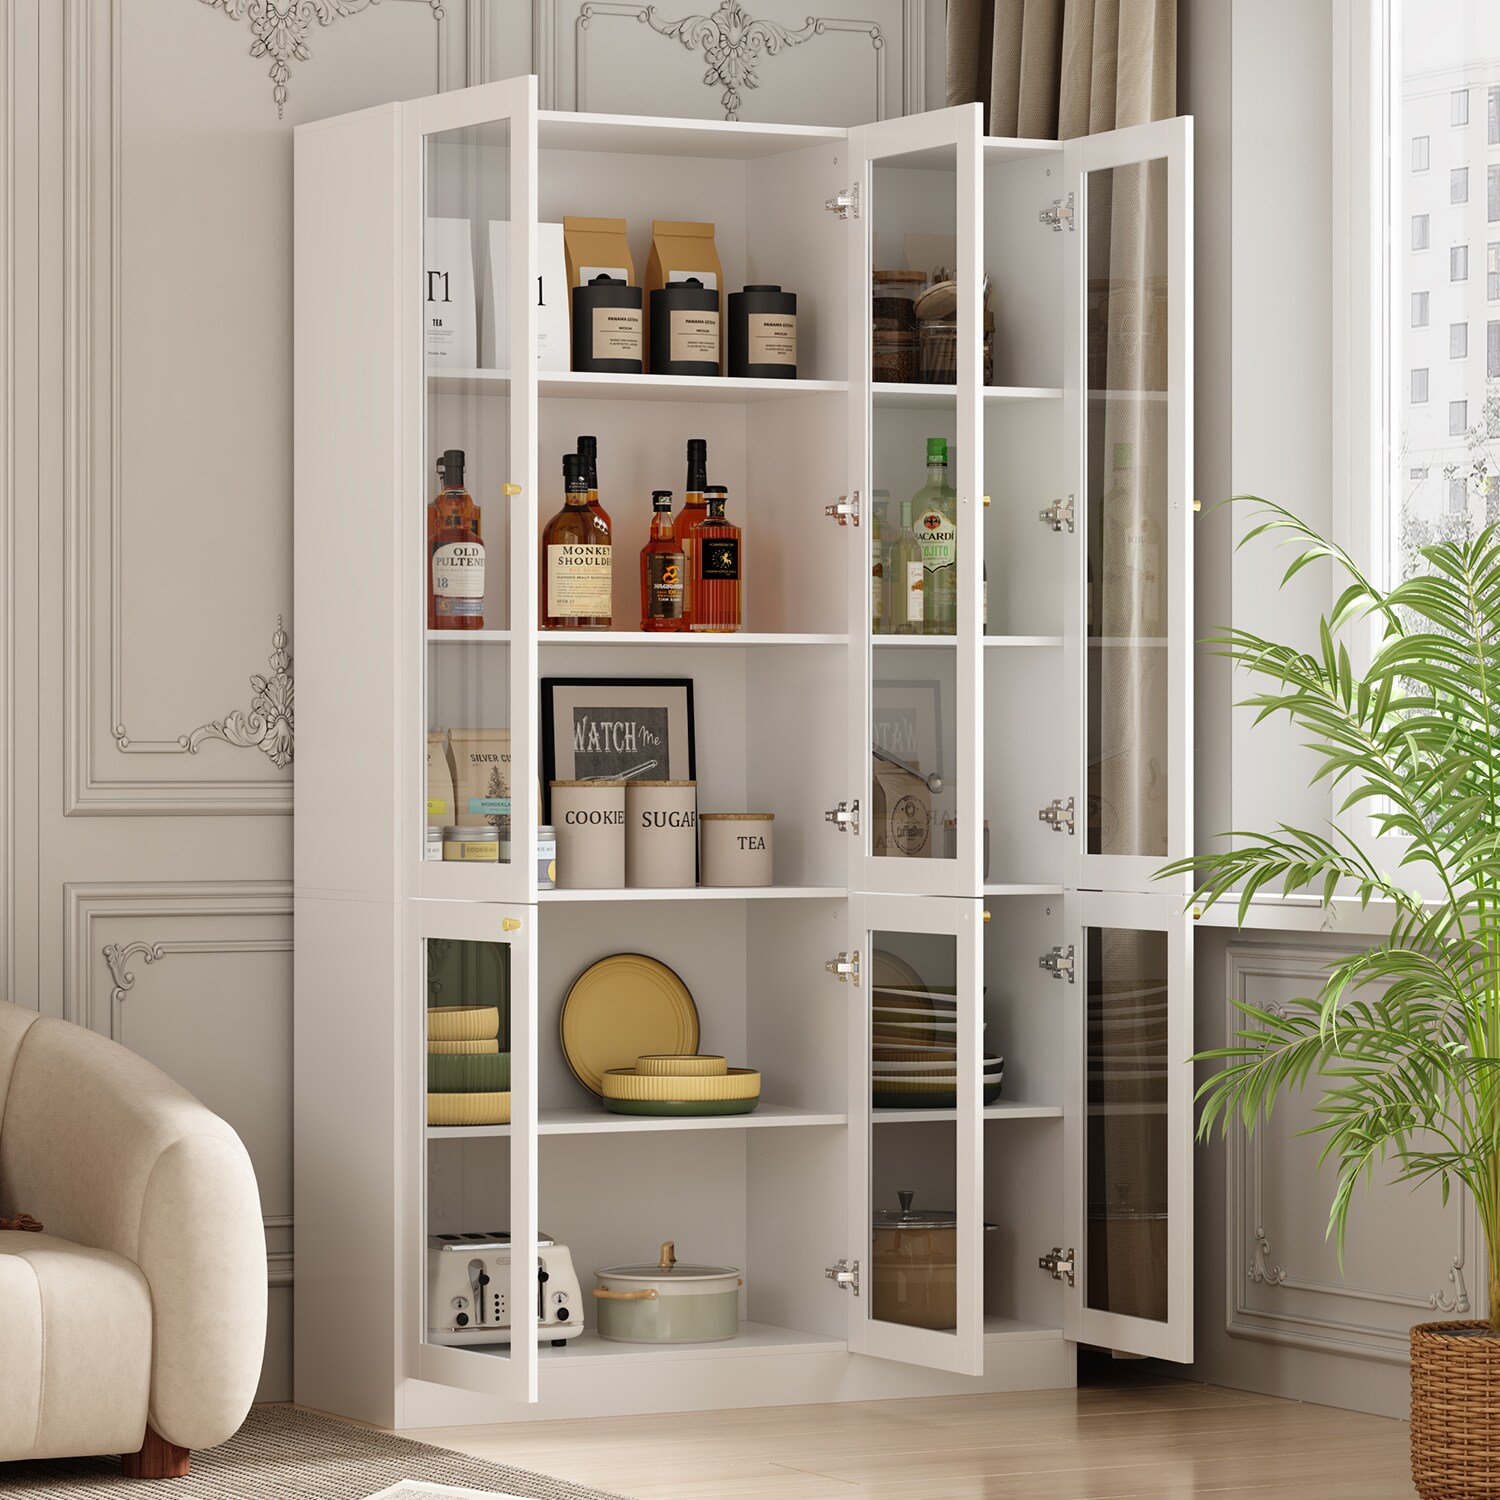 FUFU&GAGA White Mdf 5-Shelf Bookcase with Doors (47.2-in W x 78.7-in H ...